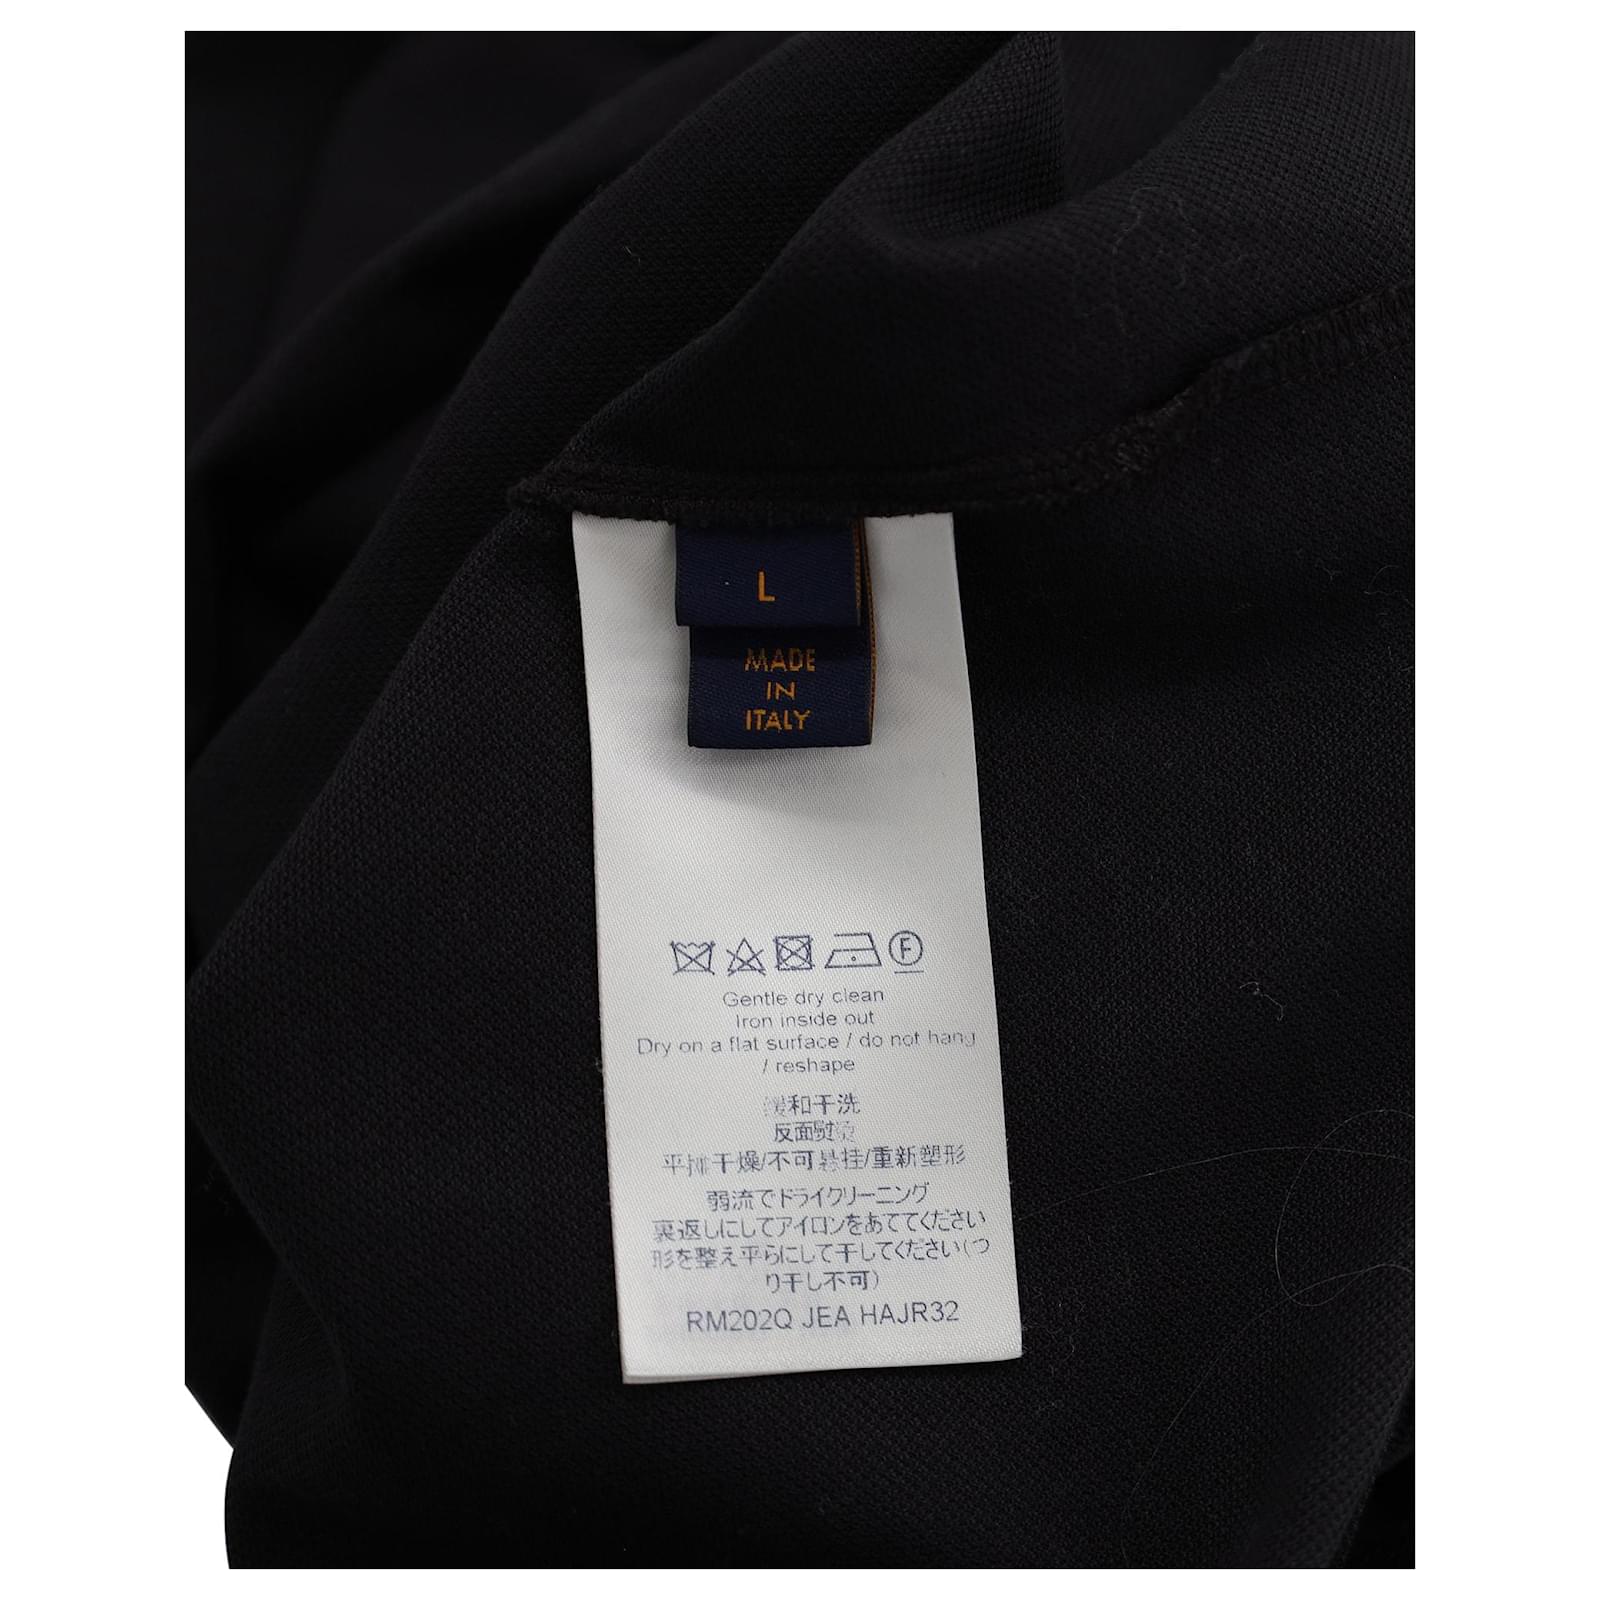 Louis Vuitton Classic Short Sleeve Pique Polo Navy. Size L0